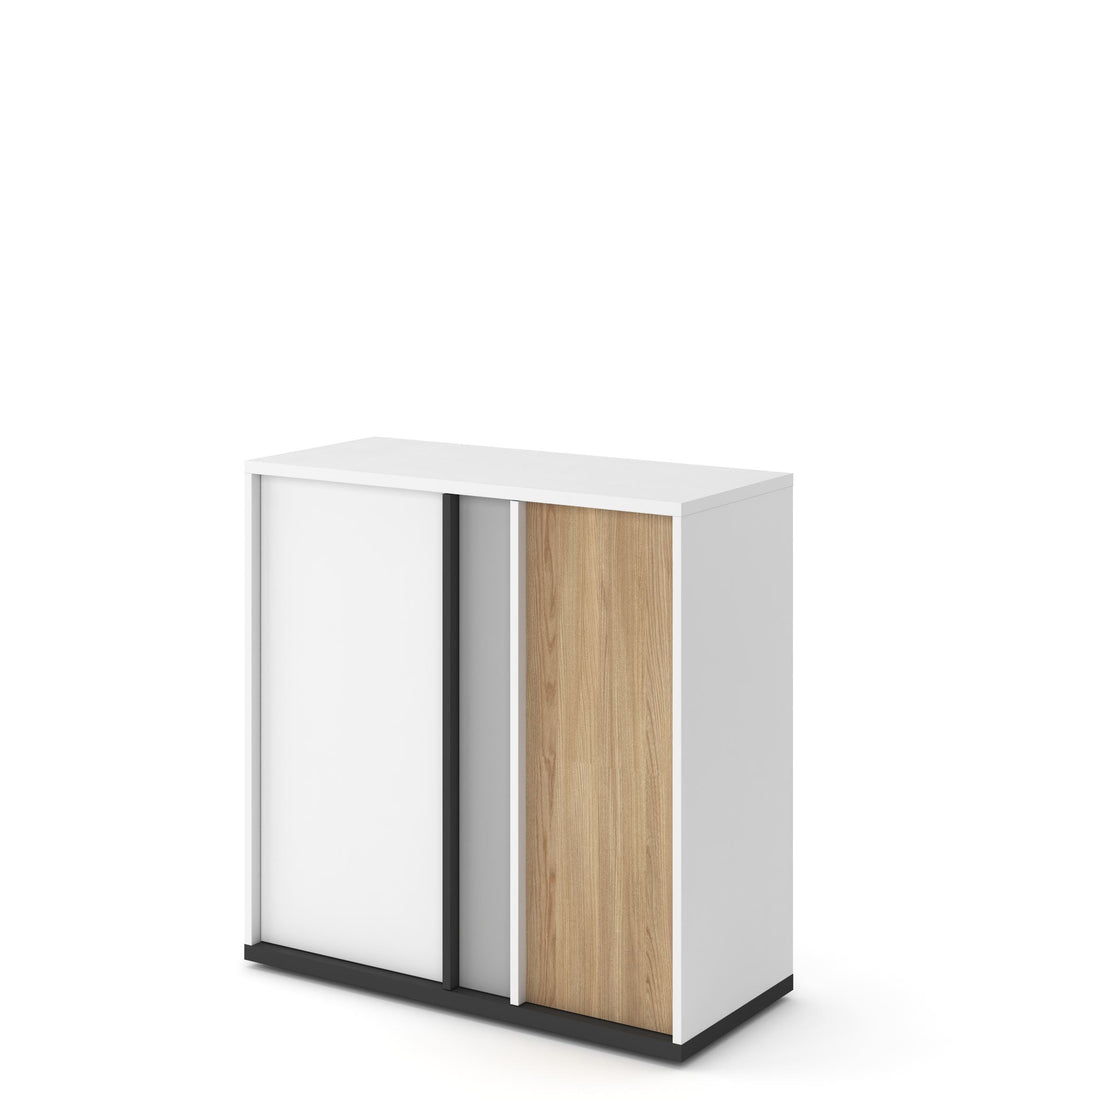 Imola IM-08 Sideboard Cabinet - £138.6 - Kids Sideboard Cabinet 